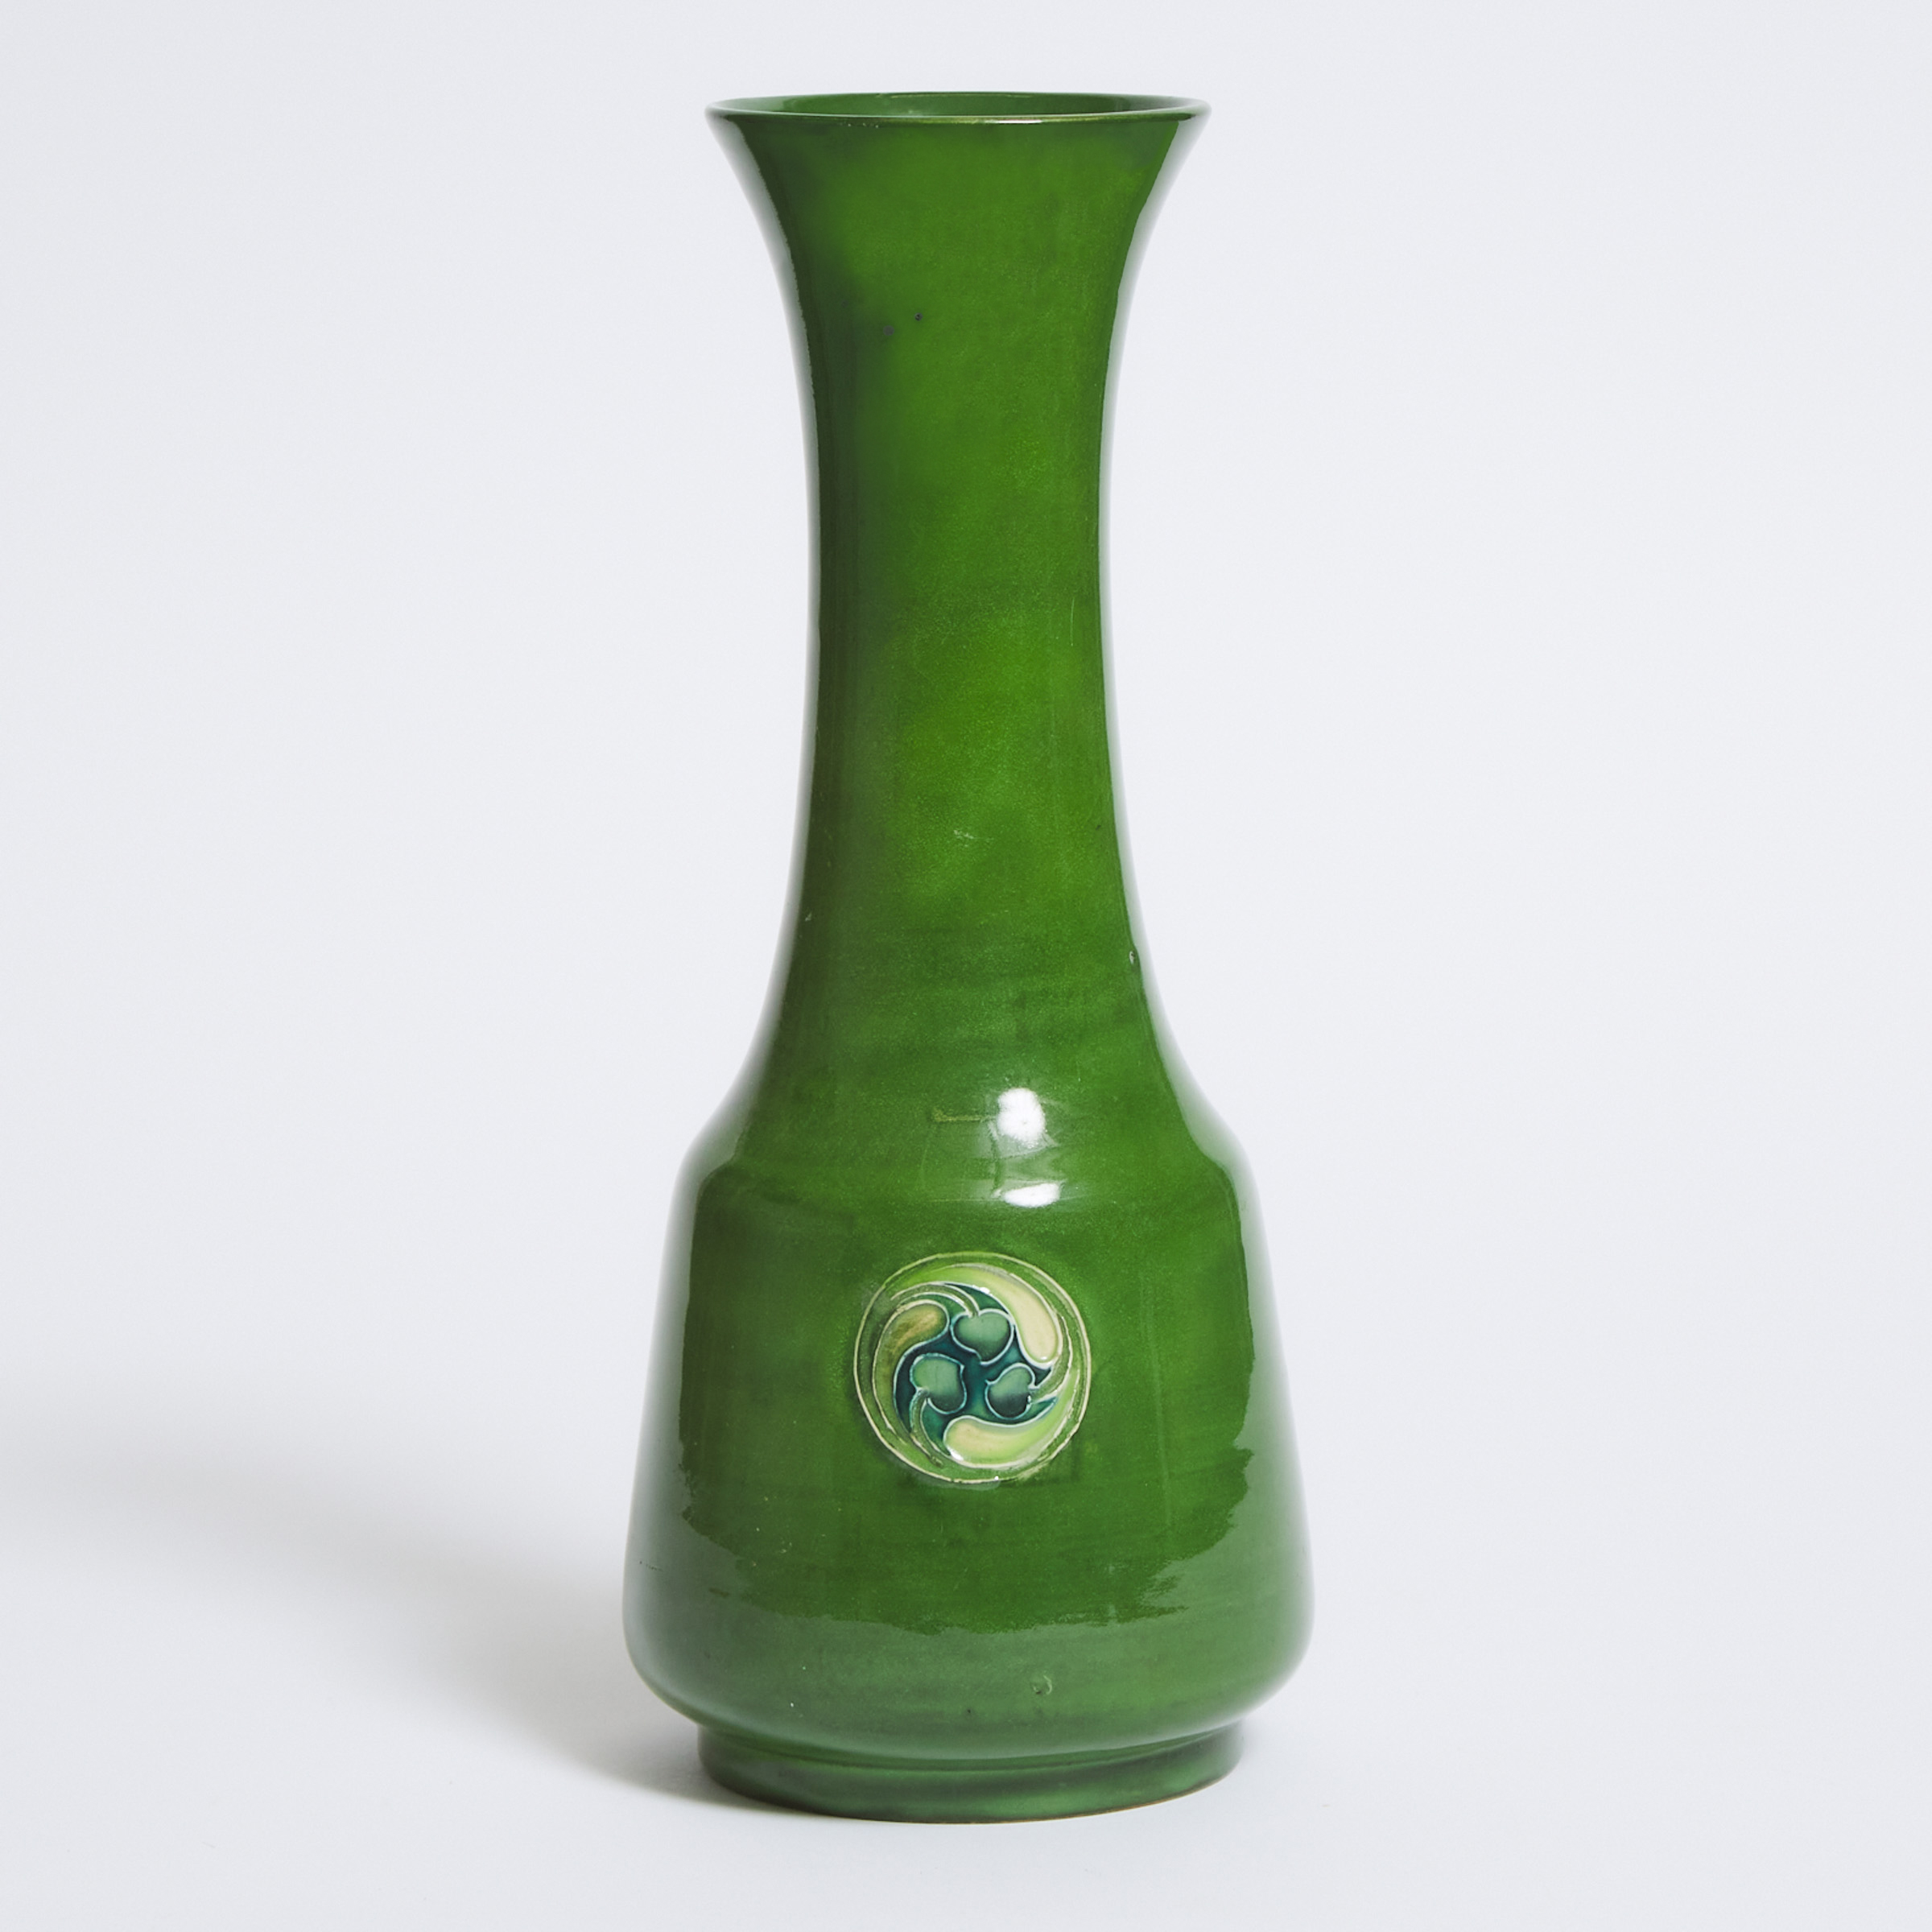 Macintyre Moorcroft Green Flamminian Vase, for Liberty & Co., c.1906-13